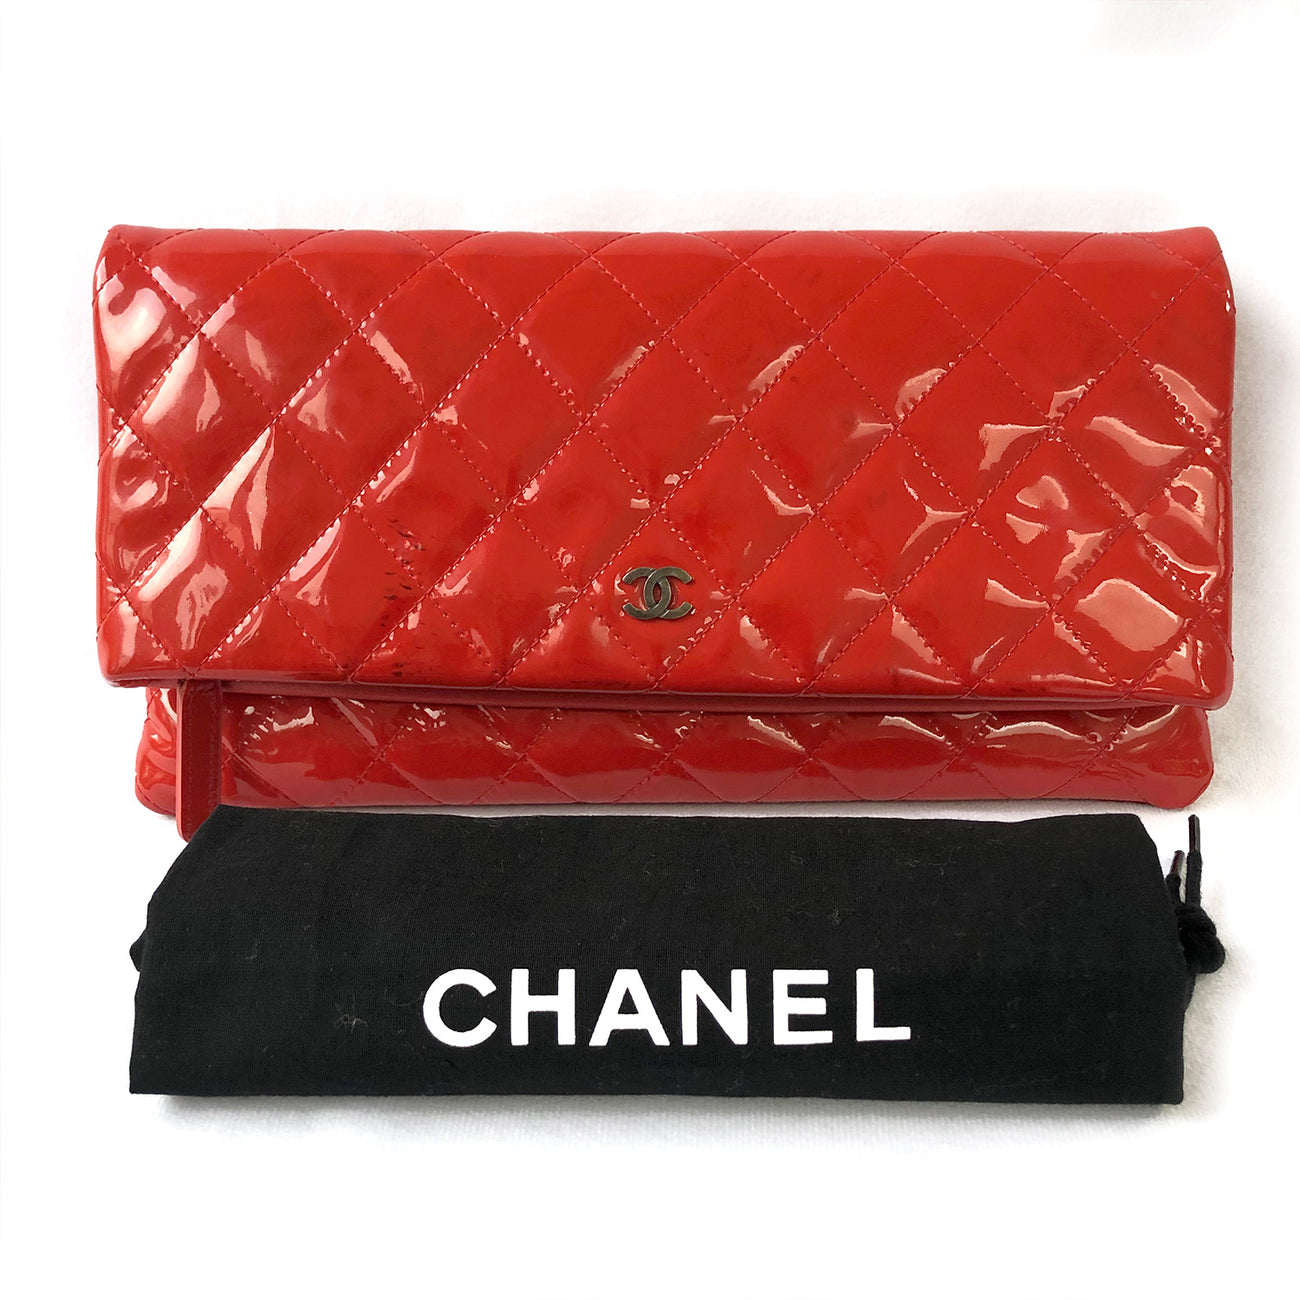 Lot - Unique Red Patent Leather CHANEL Clutch Bag